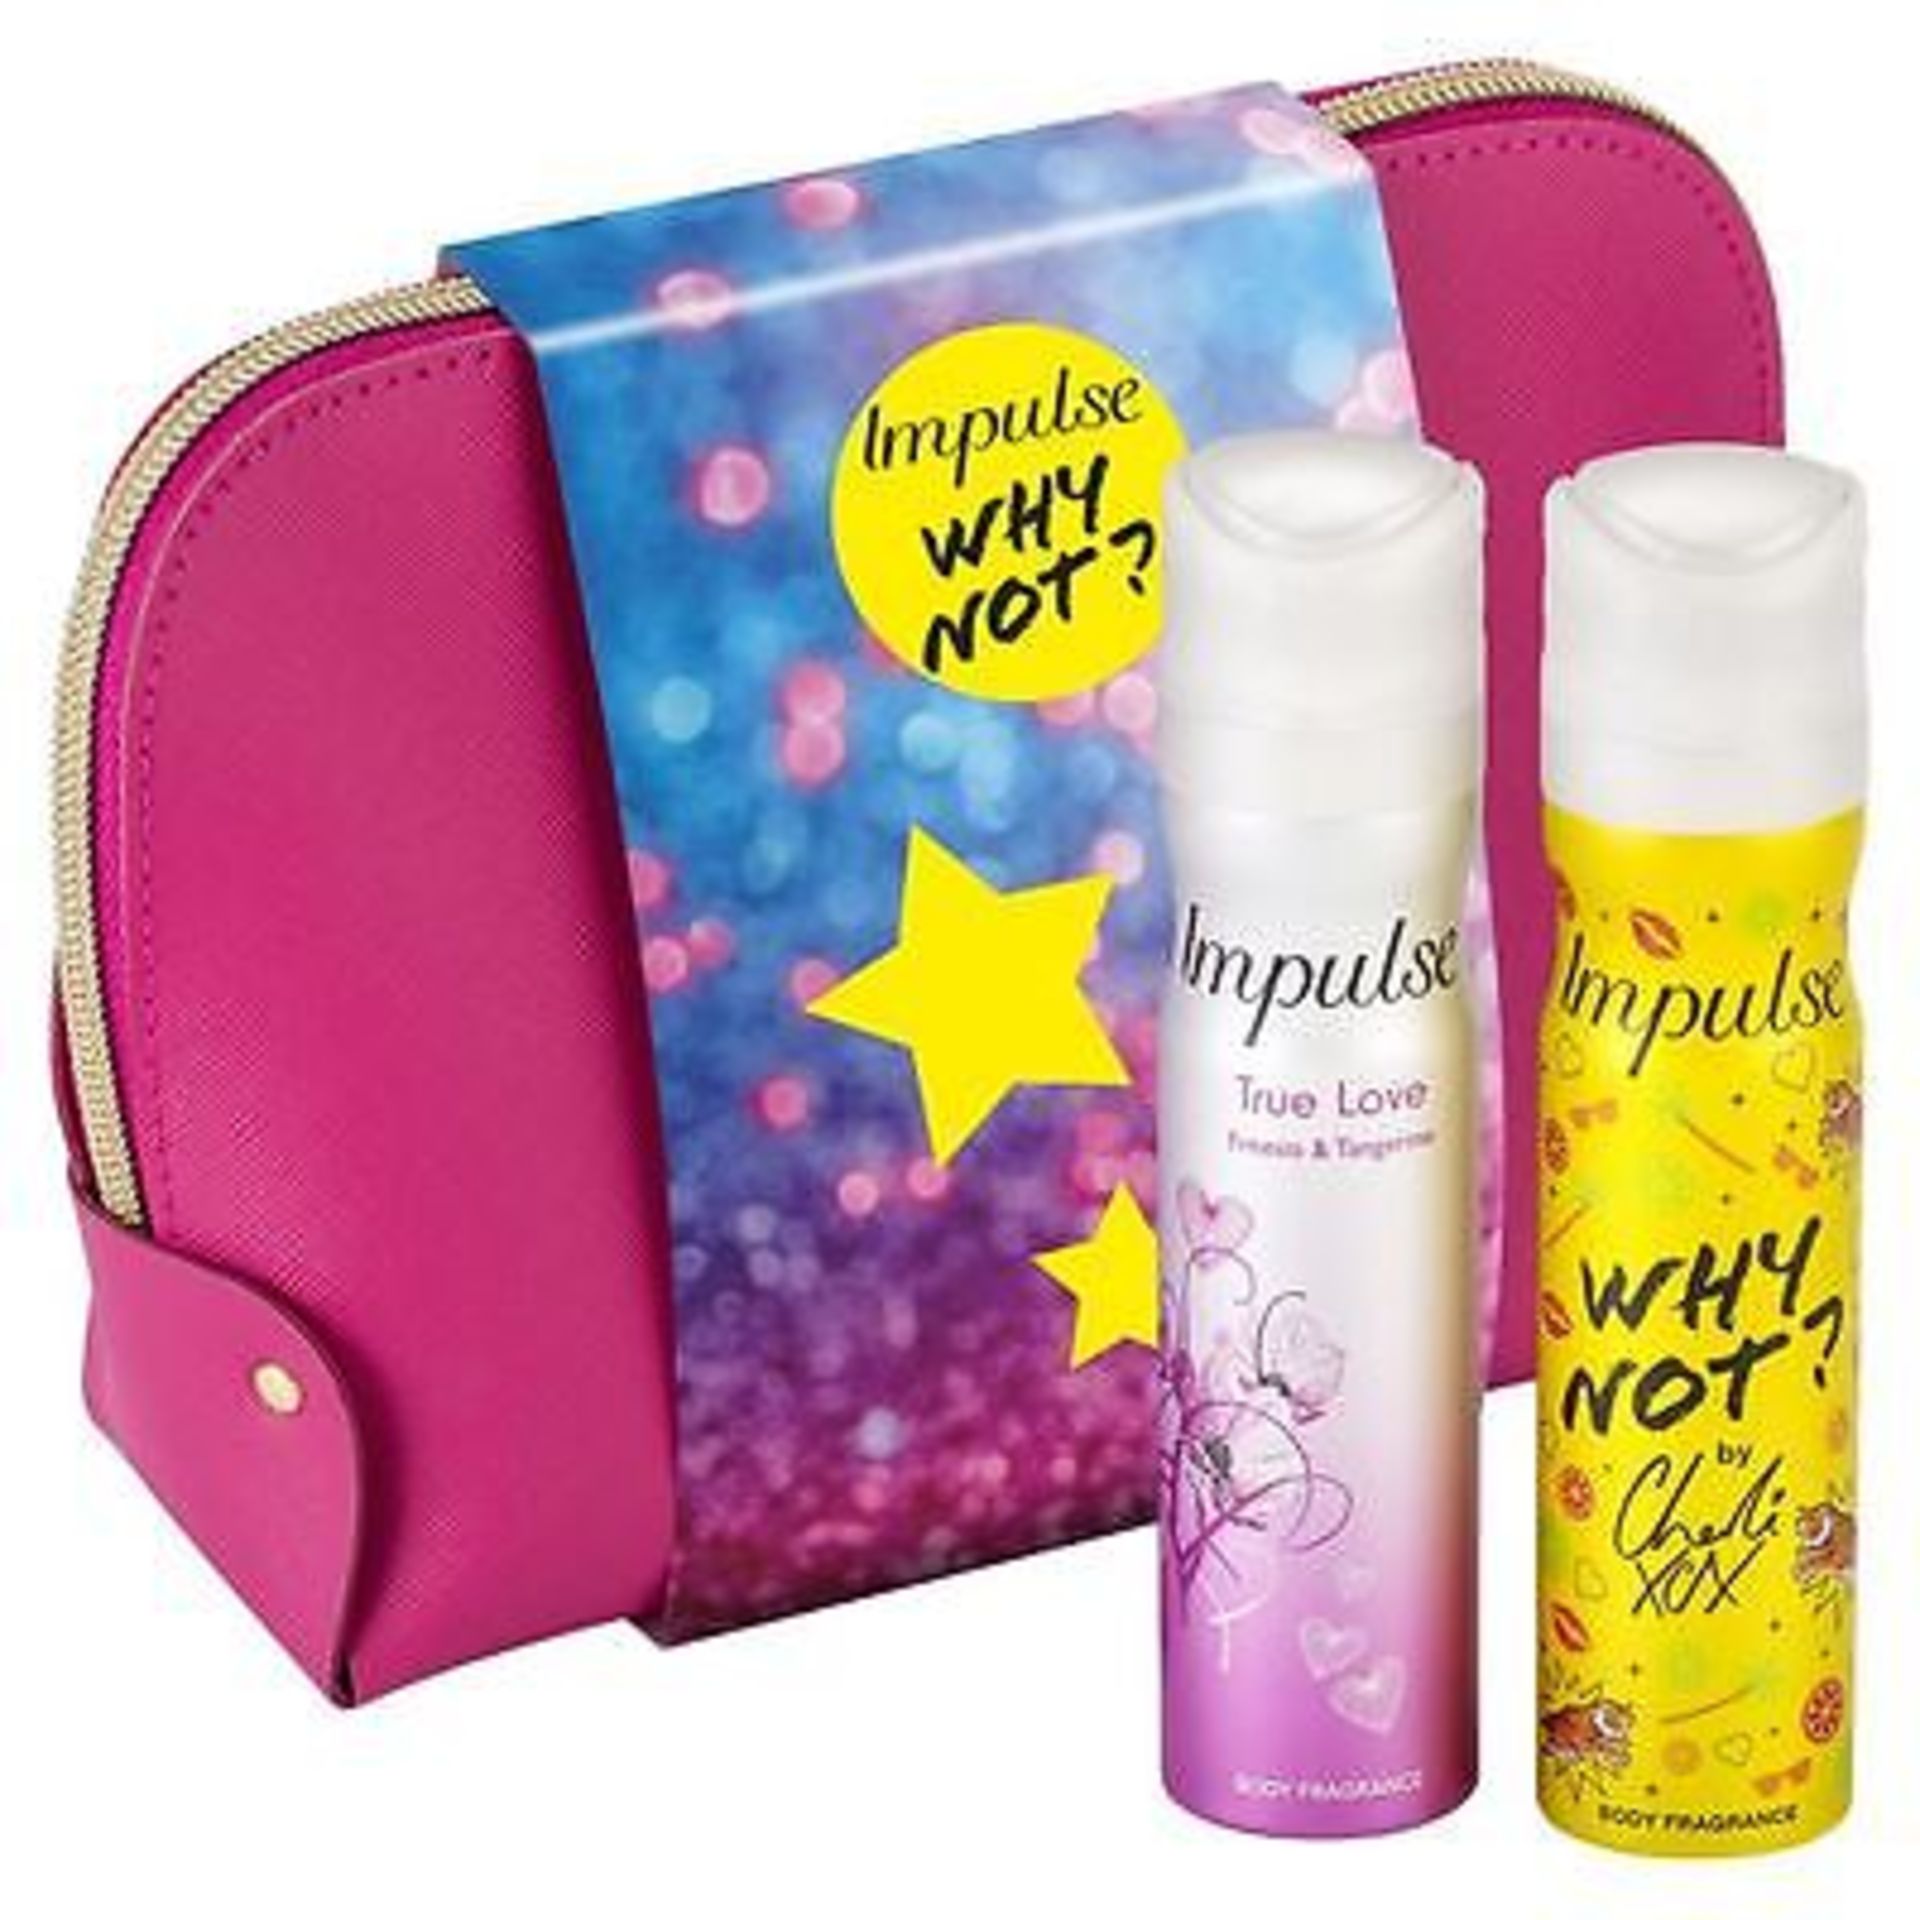 + VAT Brand New Impulse Why Not Body Fragrance Gift Set Amazon Price £12.20 - Ebay Price 9.99 - Image 2 of 2